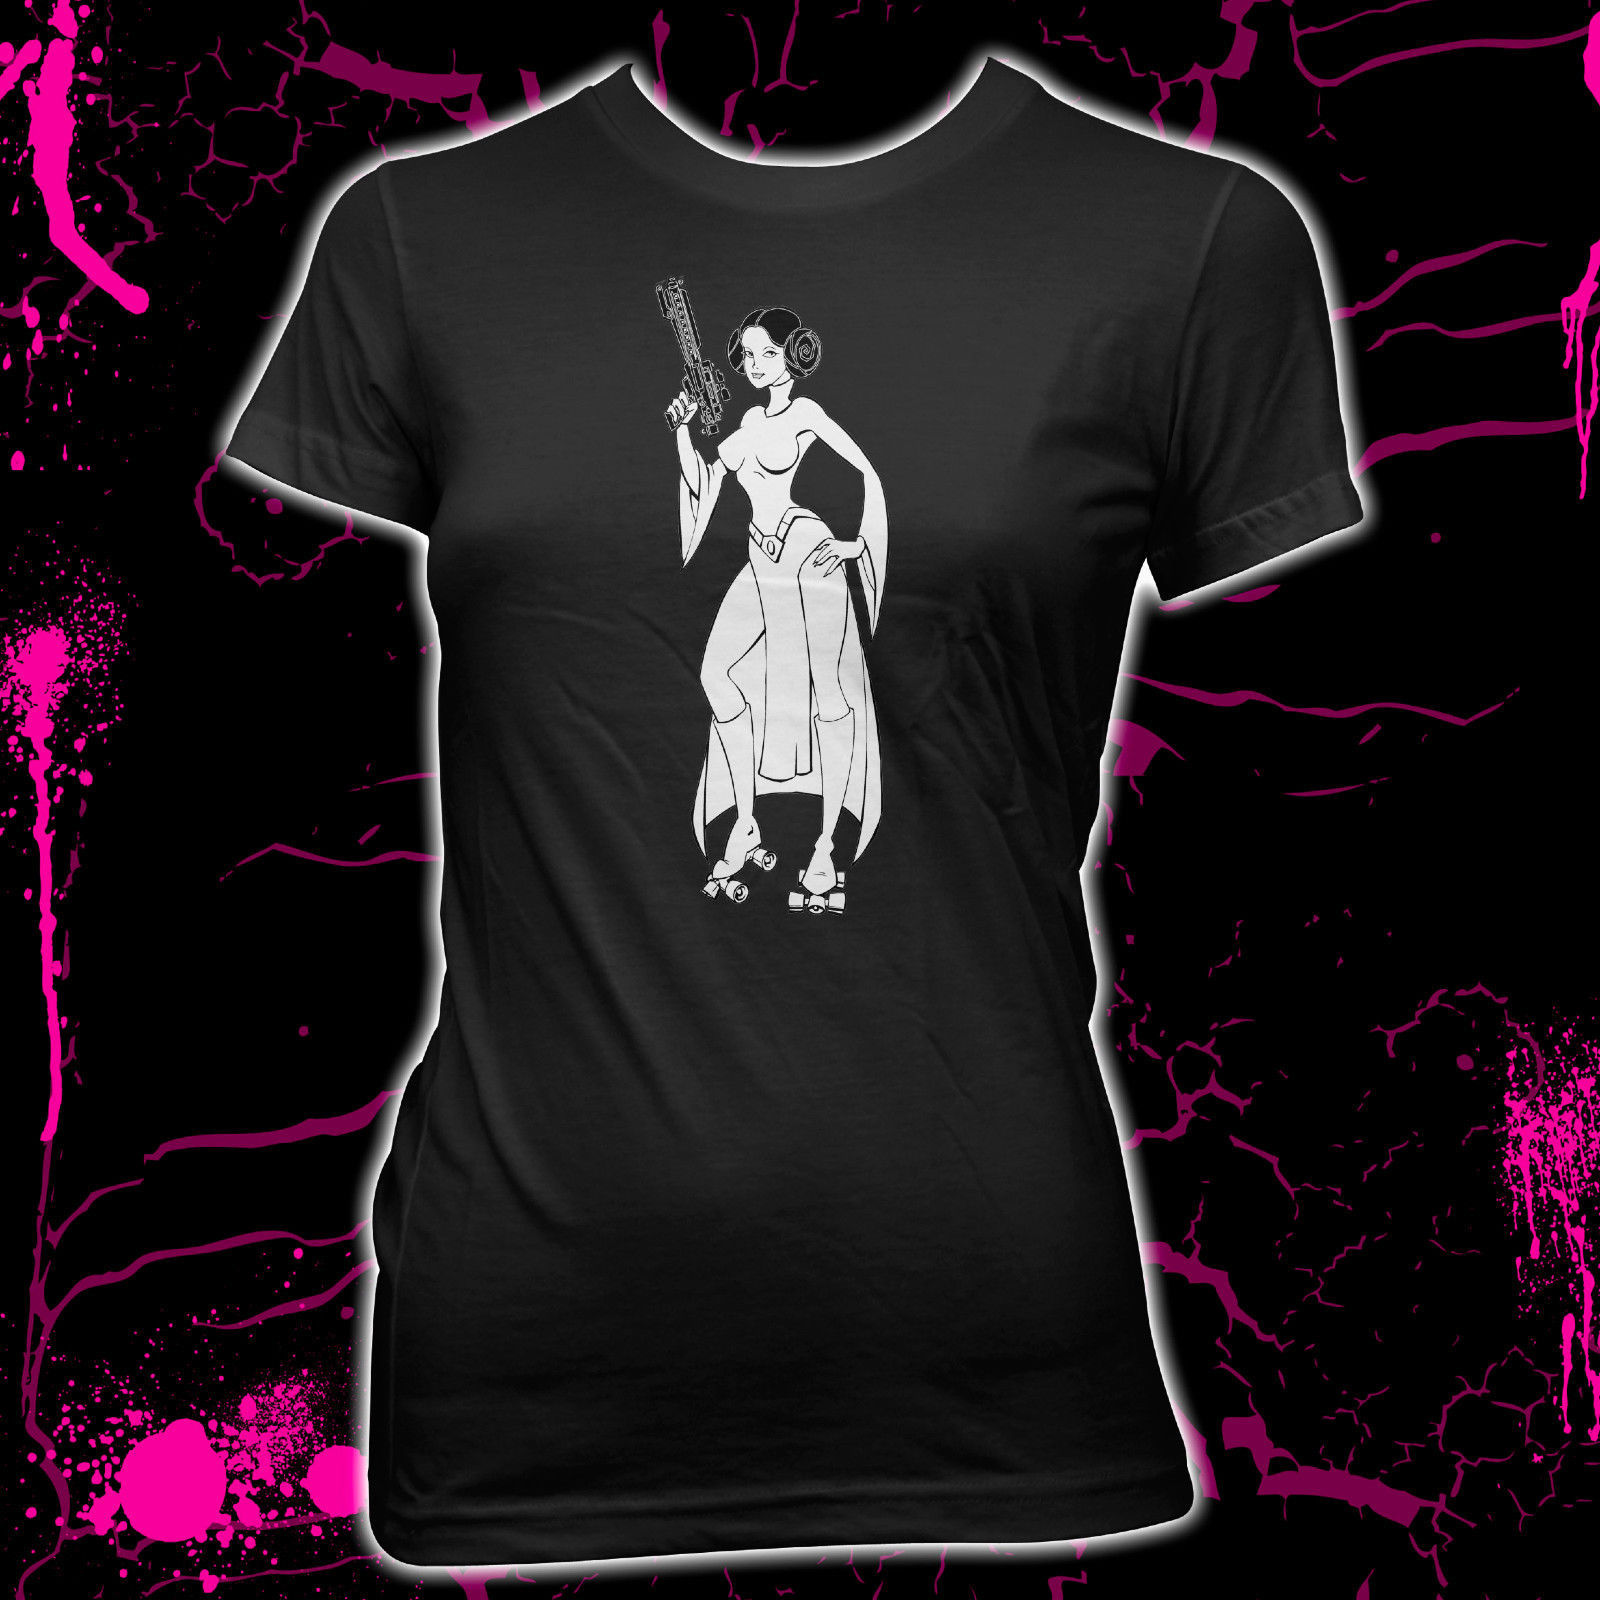 Princess Leia Roller Derby Skater - Star Wars - Women's 100% Cotton Soft T-Shirt